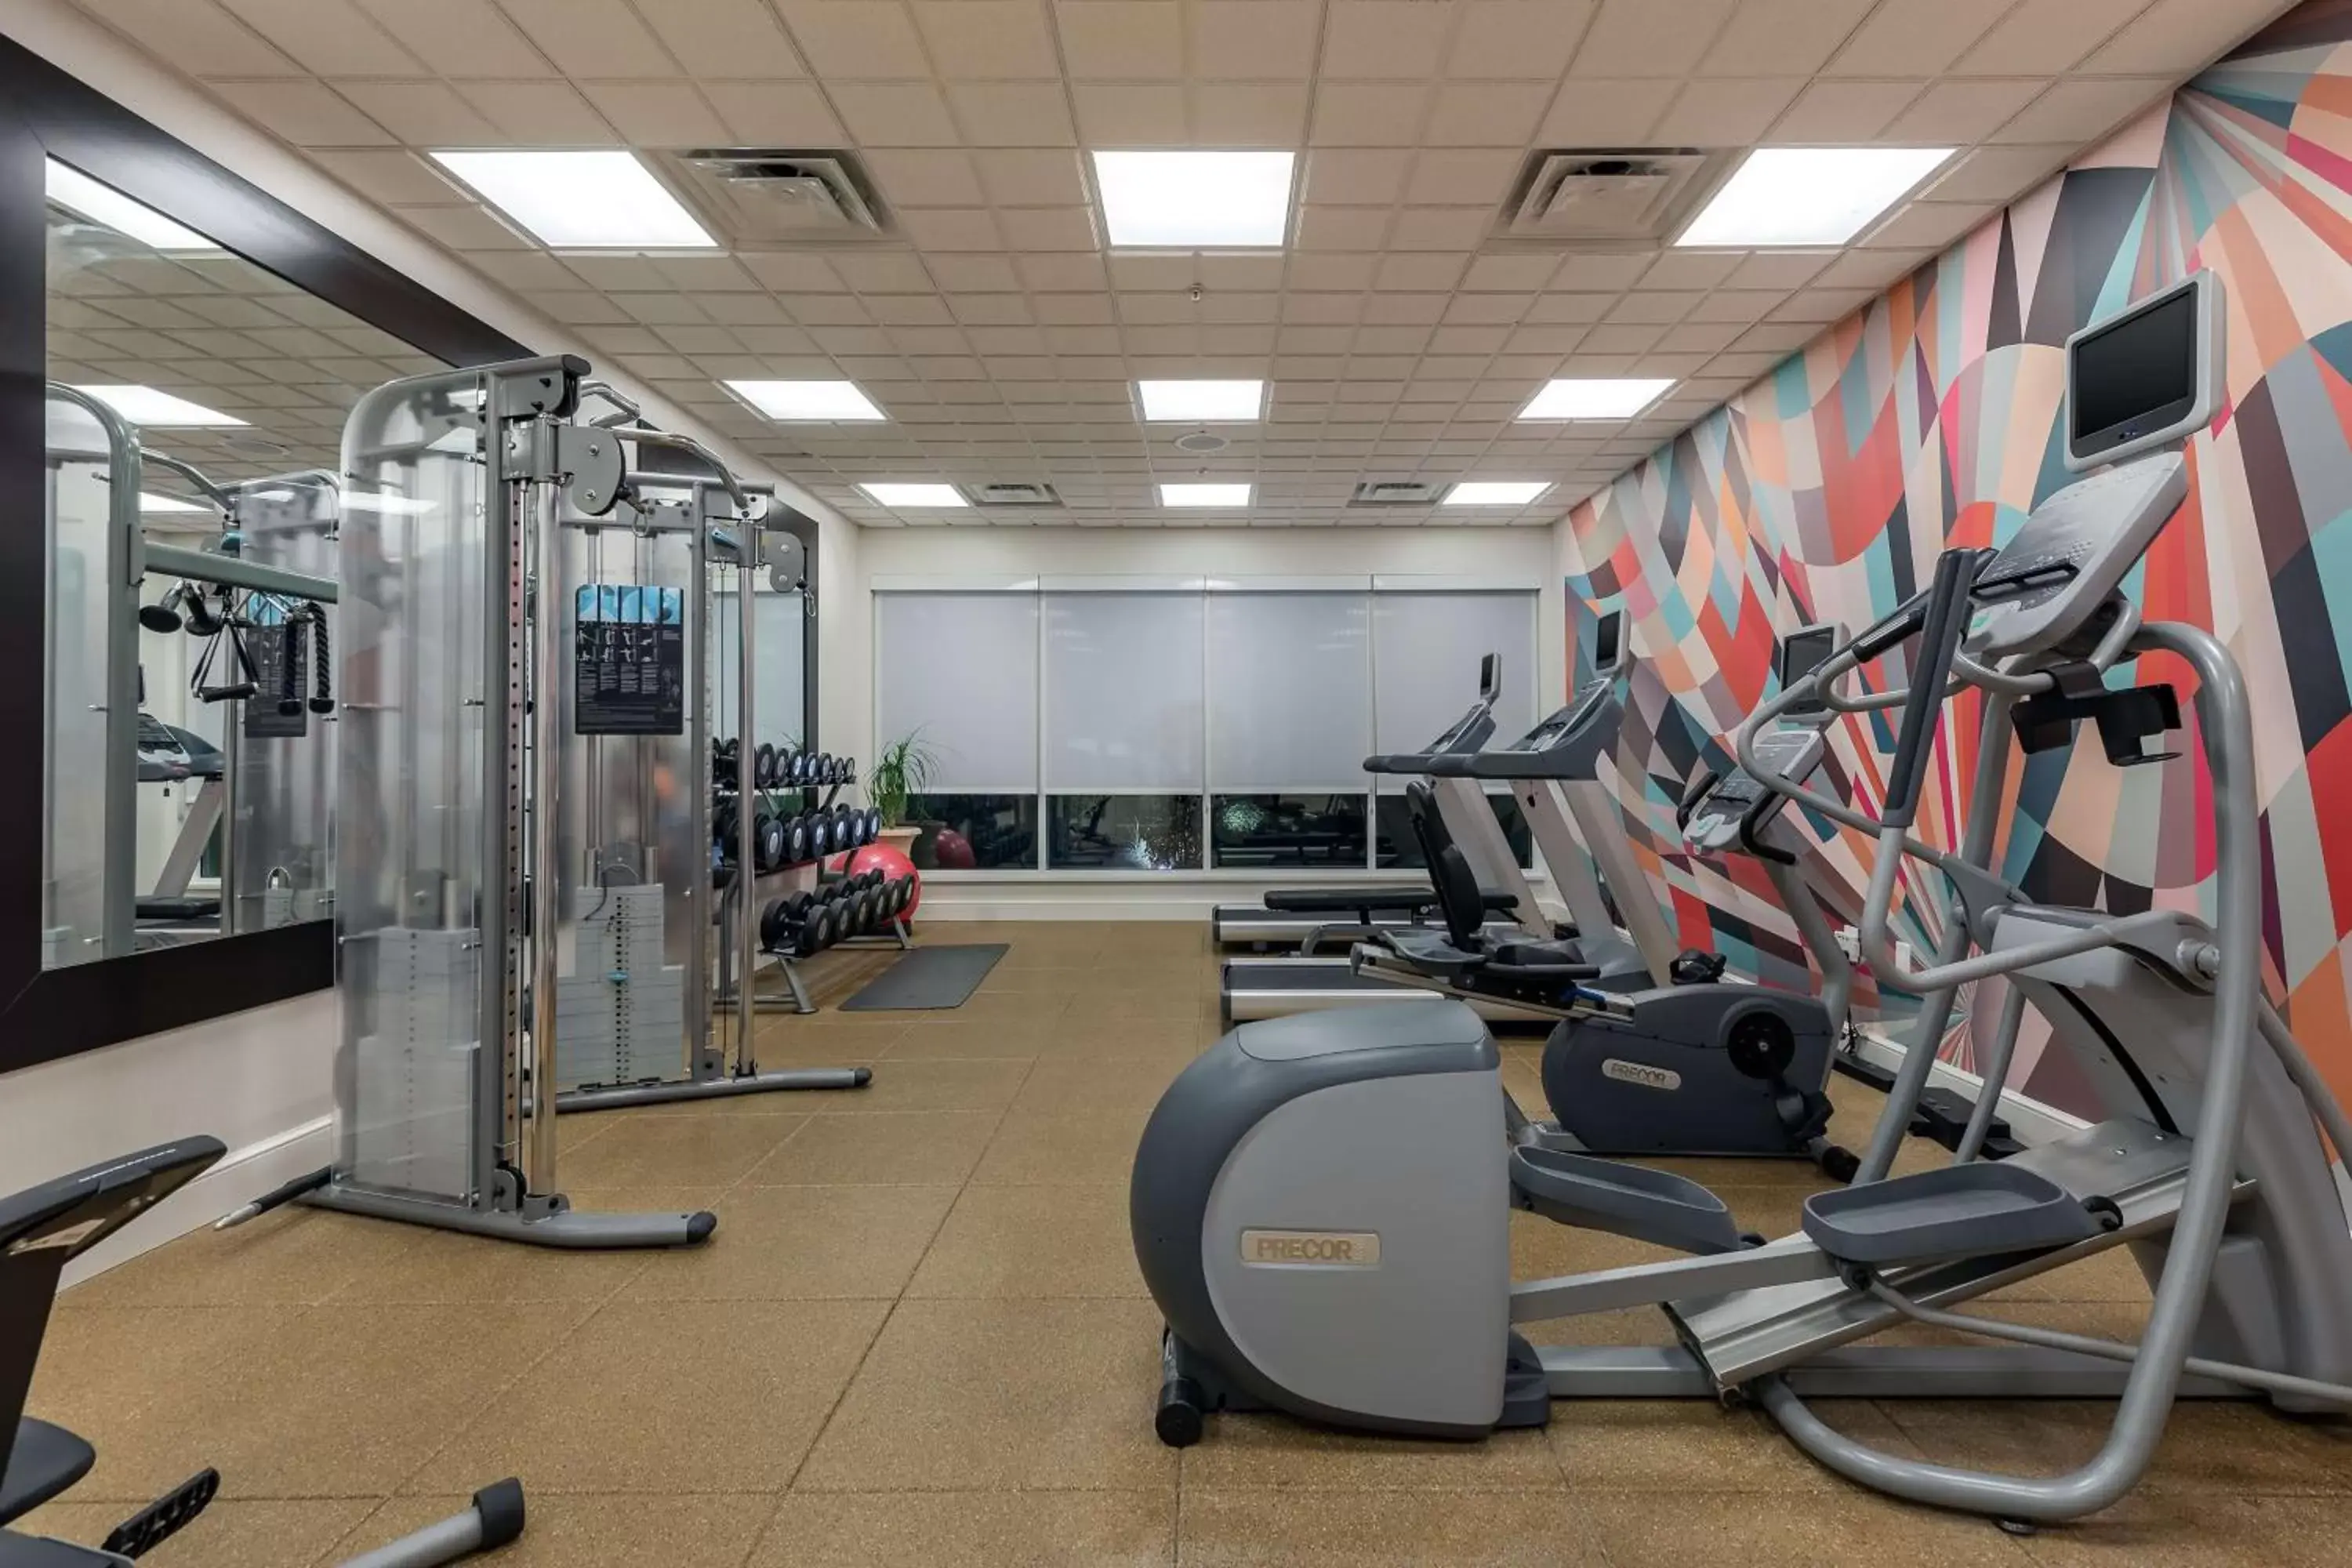 Fitness centre/facilities, Fitness Center/Facilities in Hilton Garden Inn Tifton